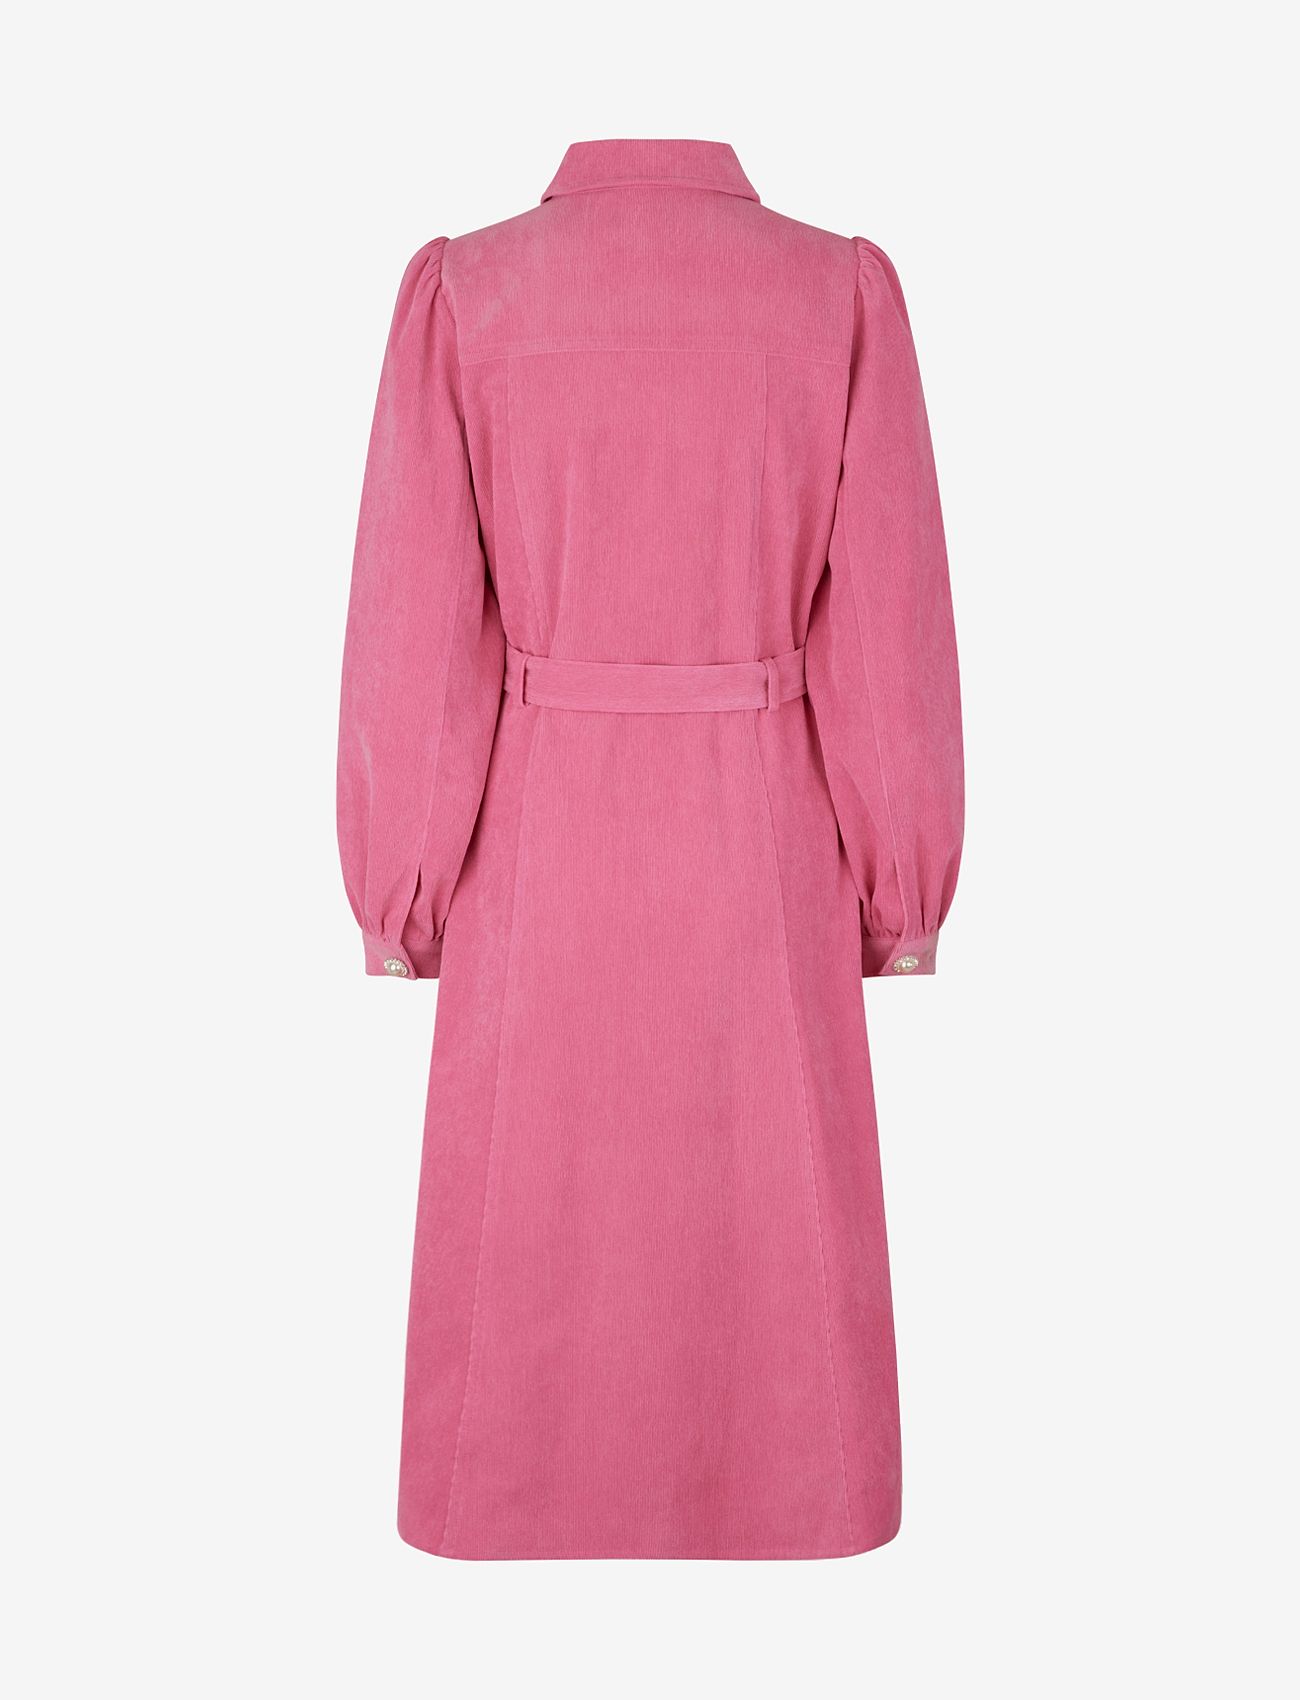 Cras - Celinecras Dress - shirt dresses - aurora pink - 1